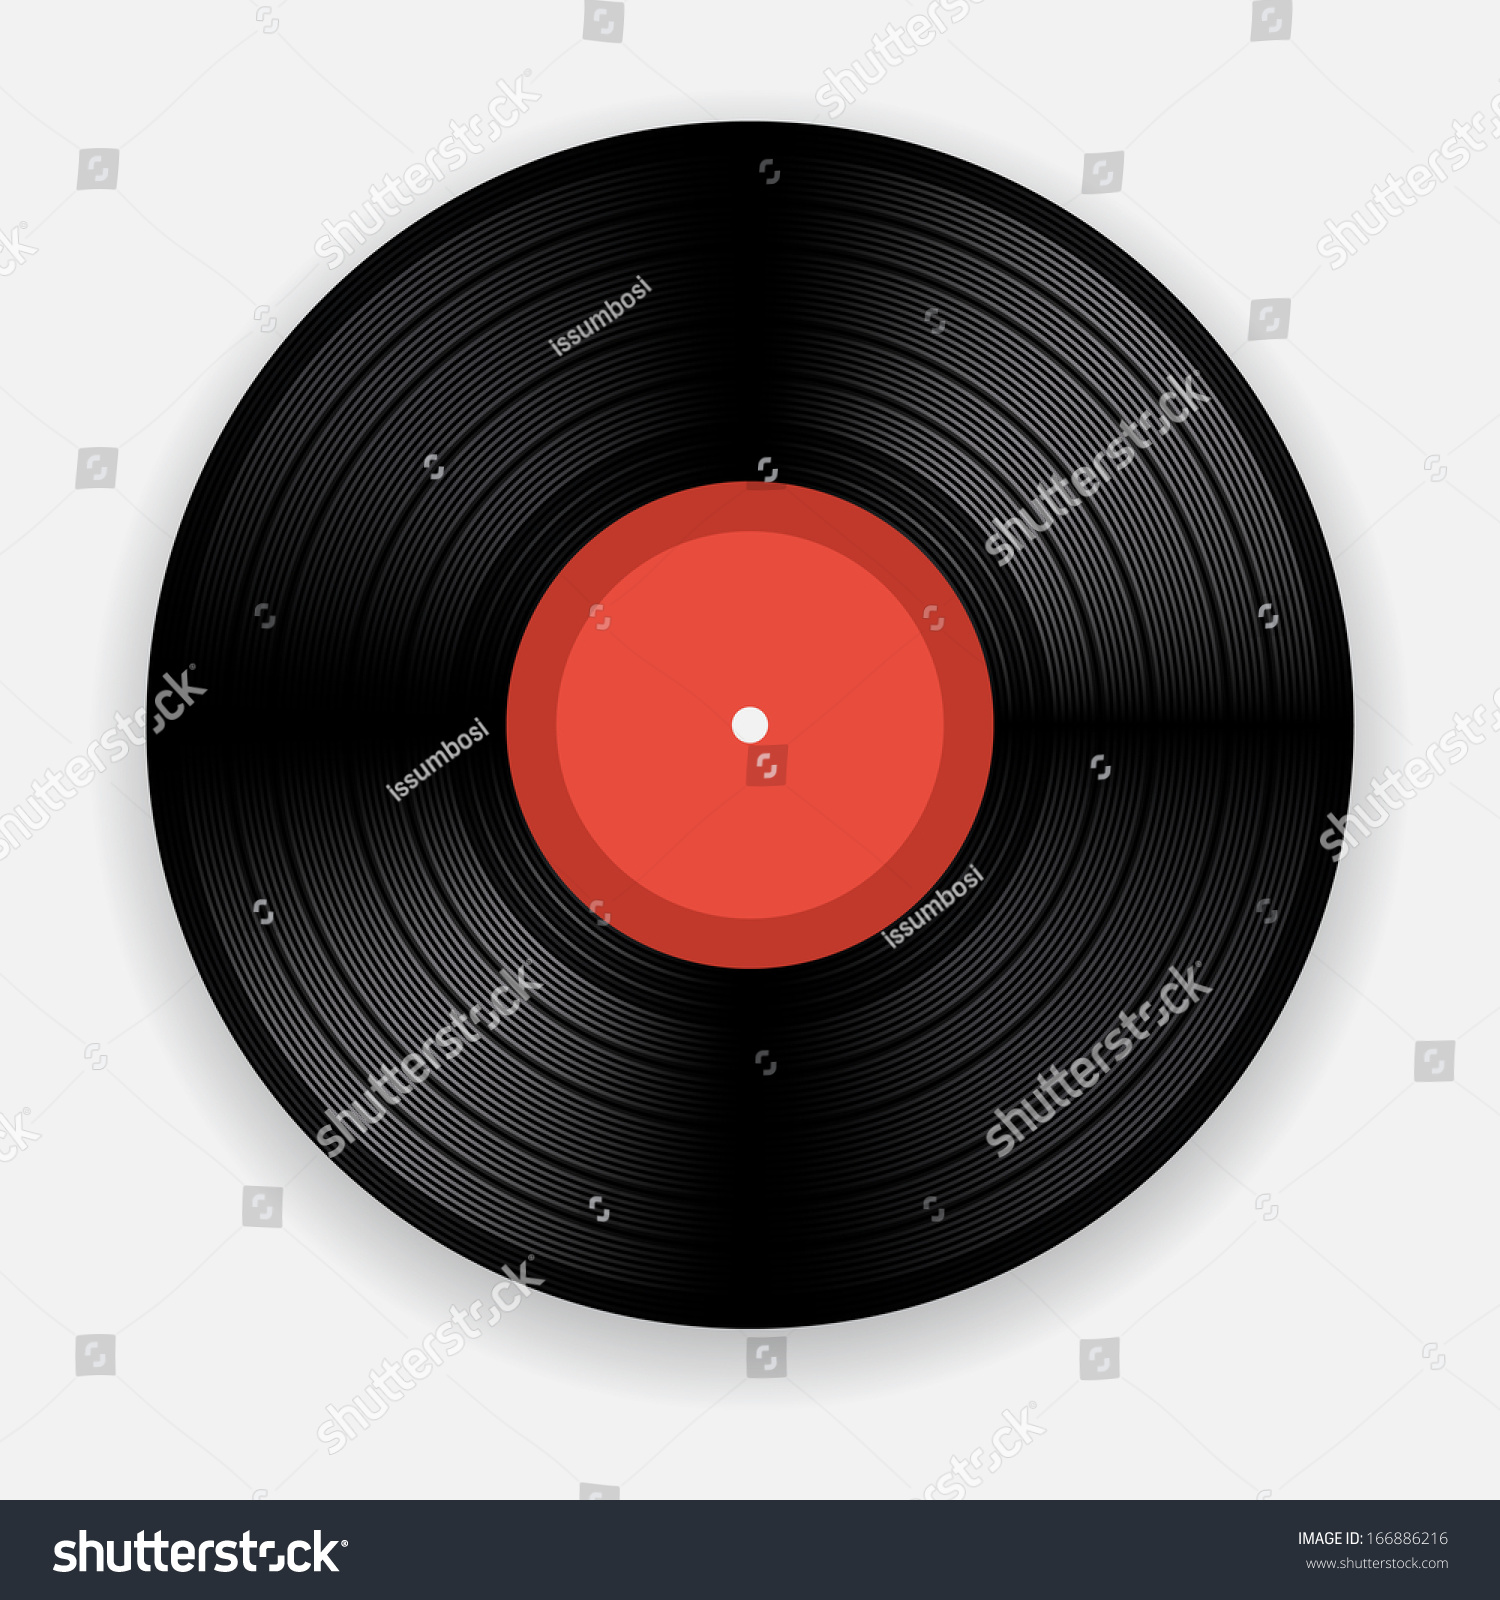 Blank Isolated Vinyl Record Stock Vector 166886216 - Shutterstock